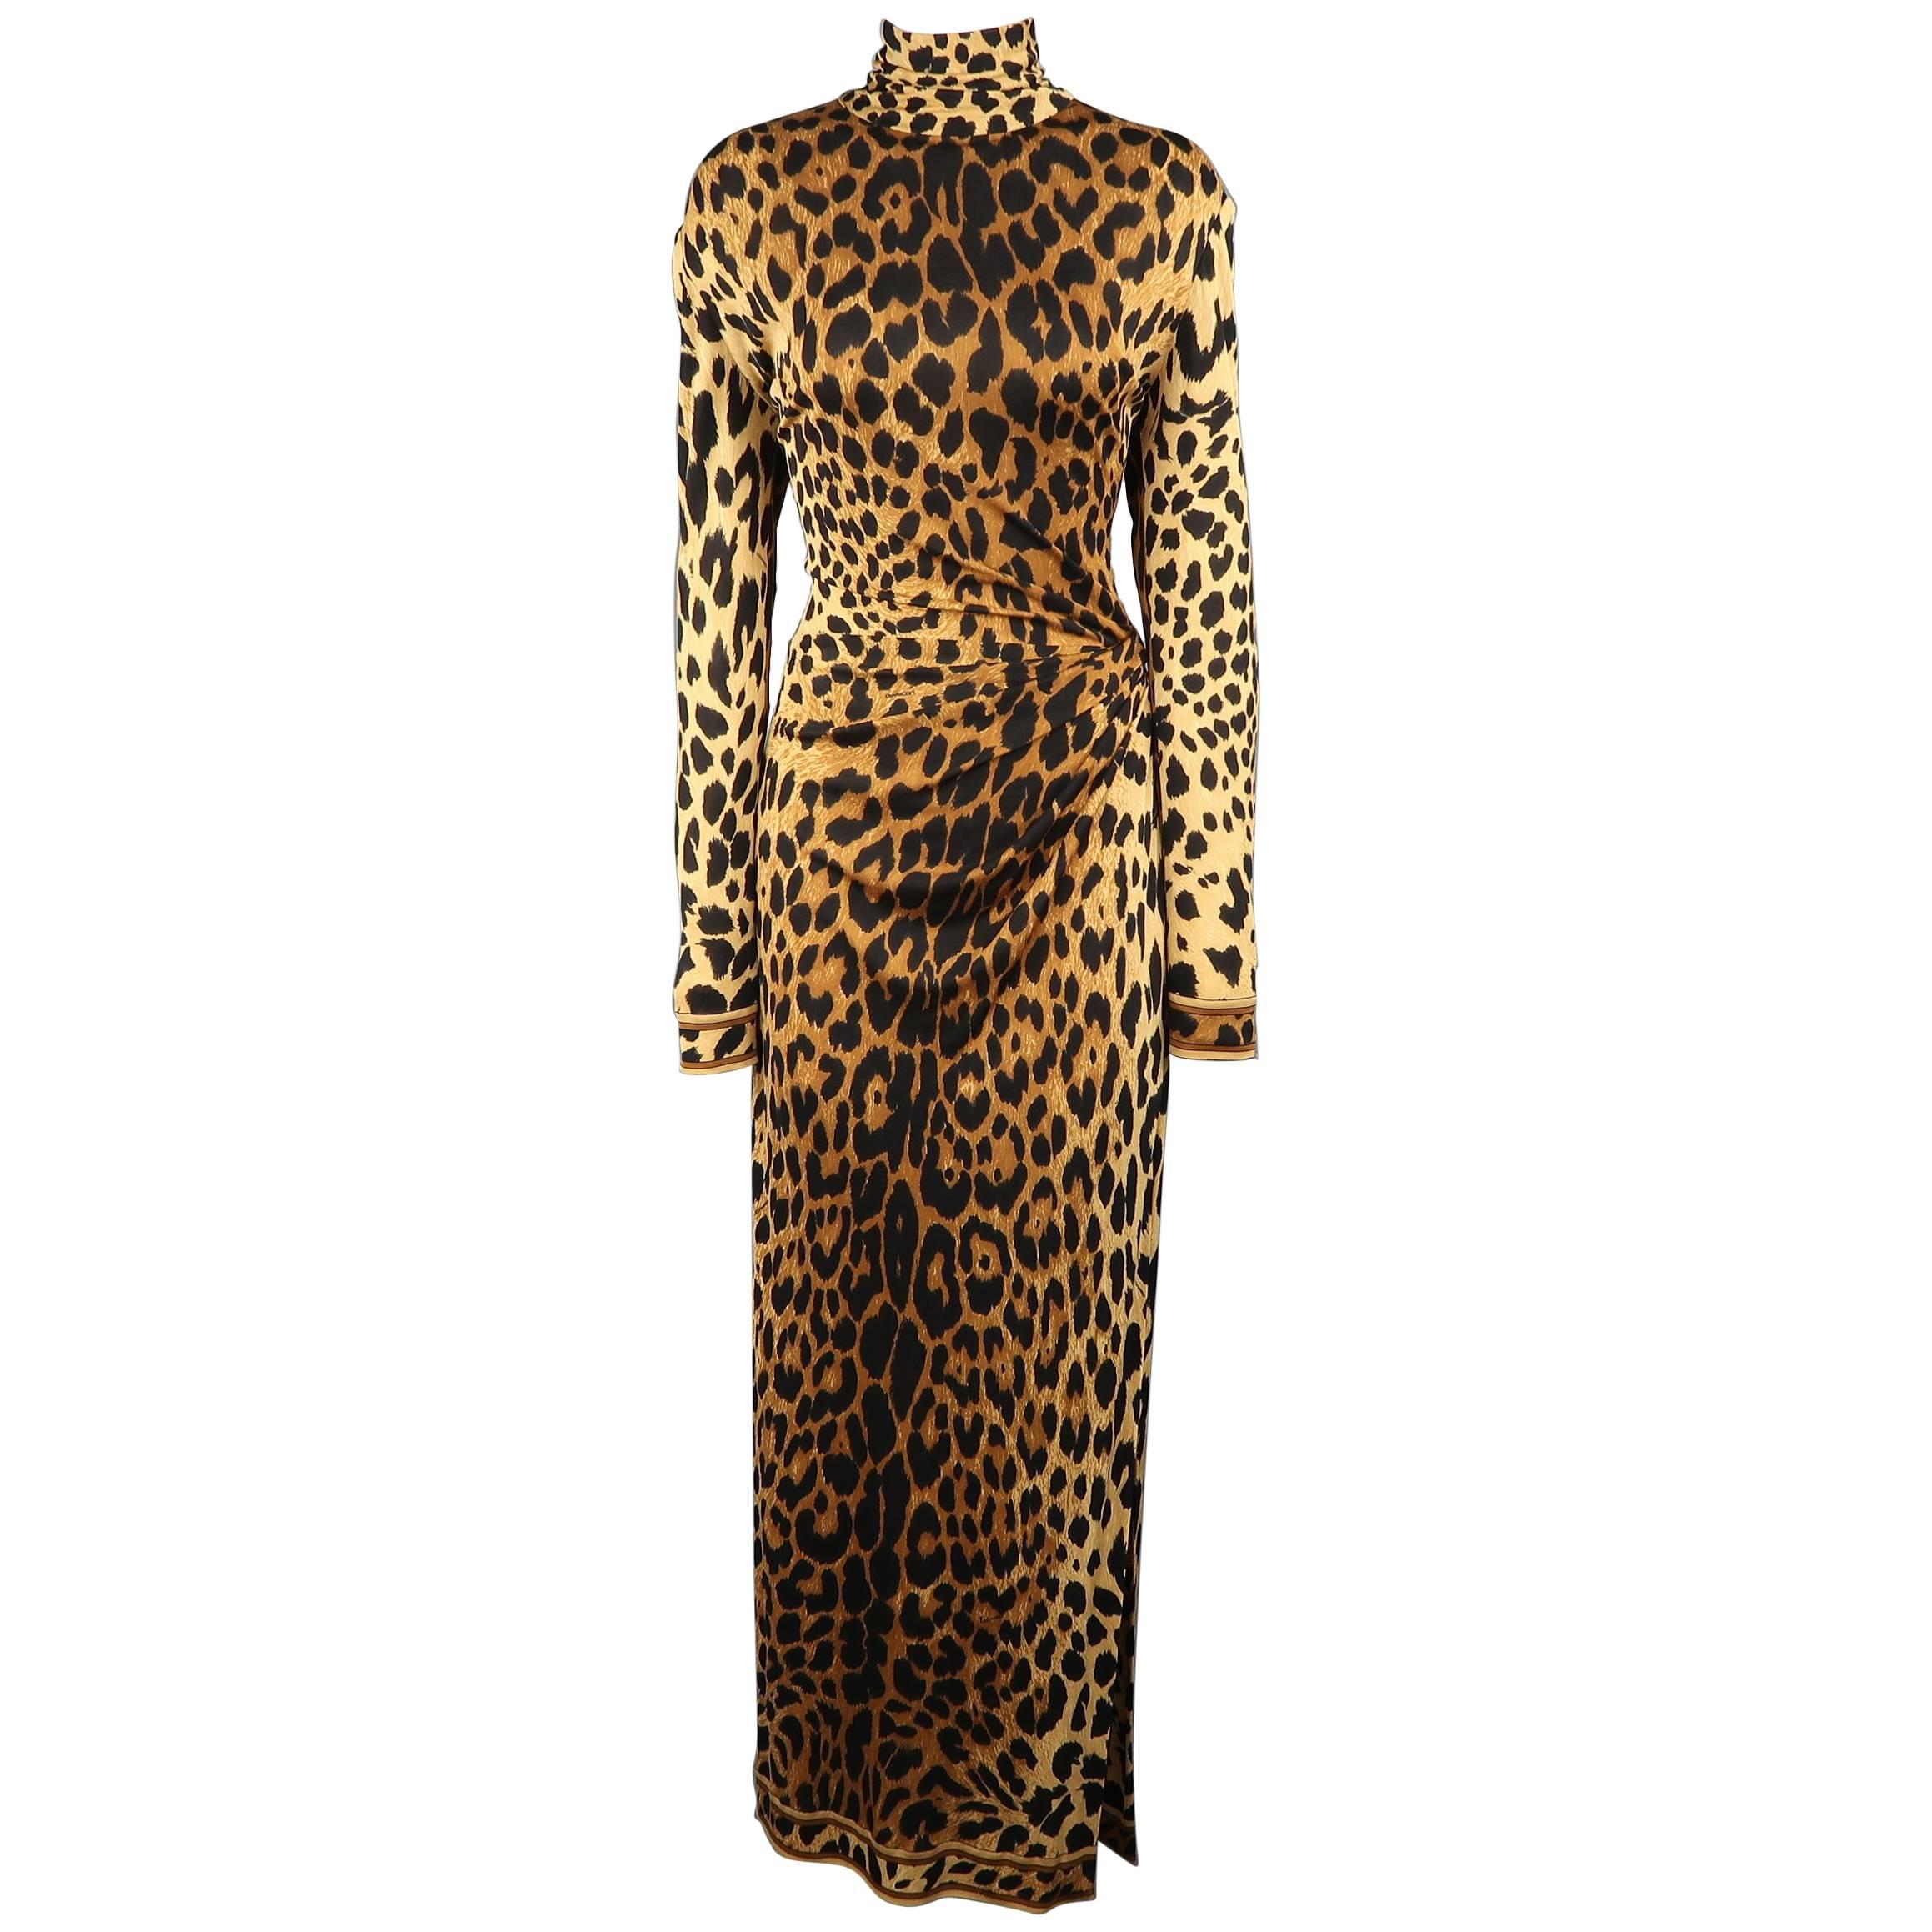 LEONARD - PARIS Size M Cheetah Print High Neck Draped Cocktail Dress